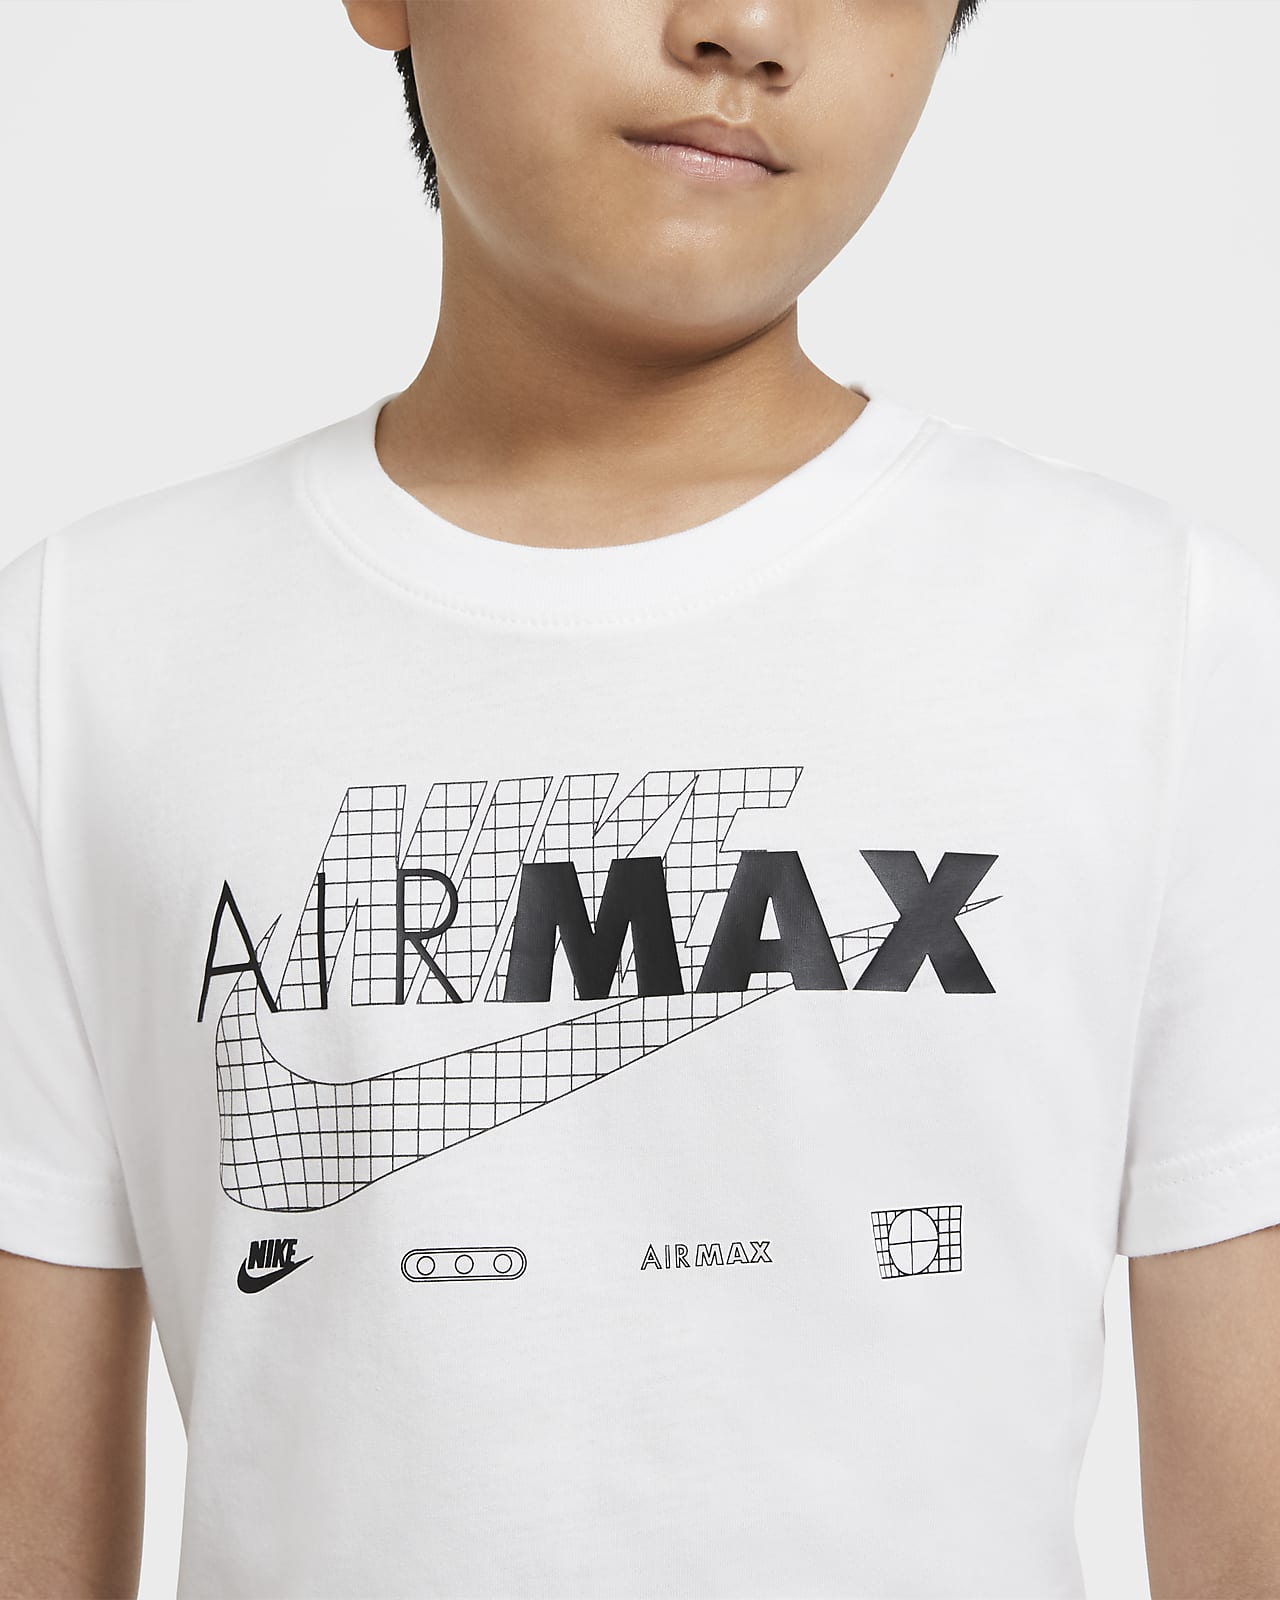 nike airmax shirt